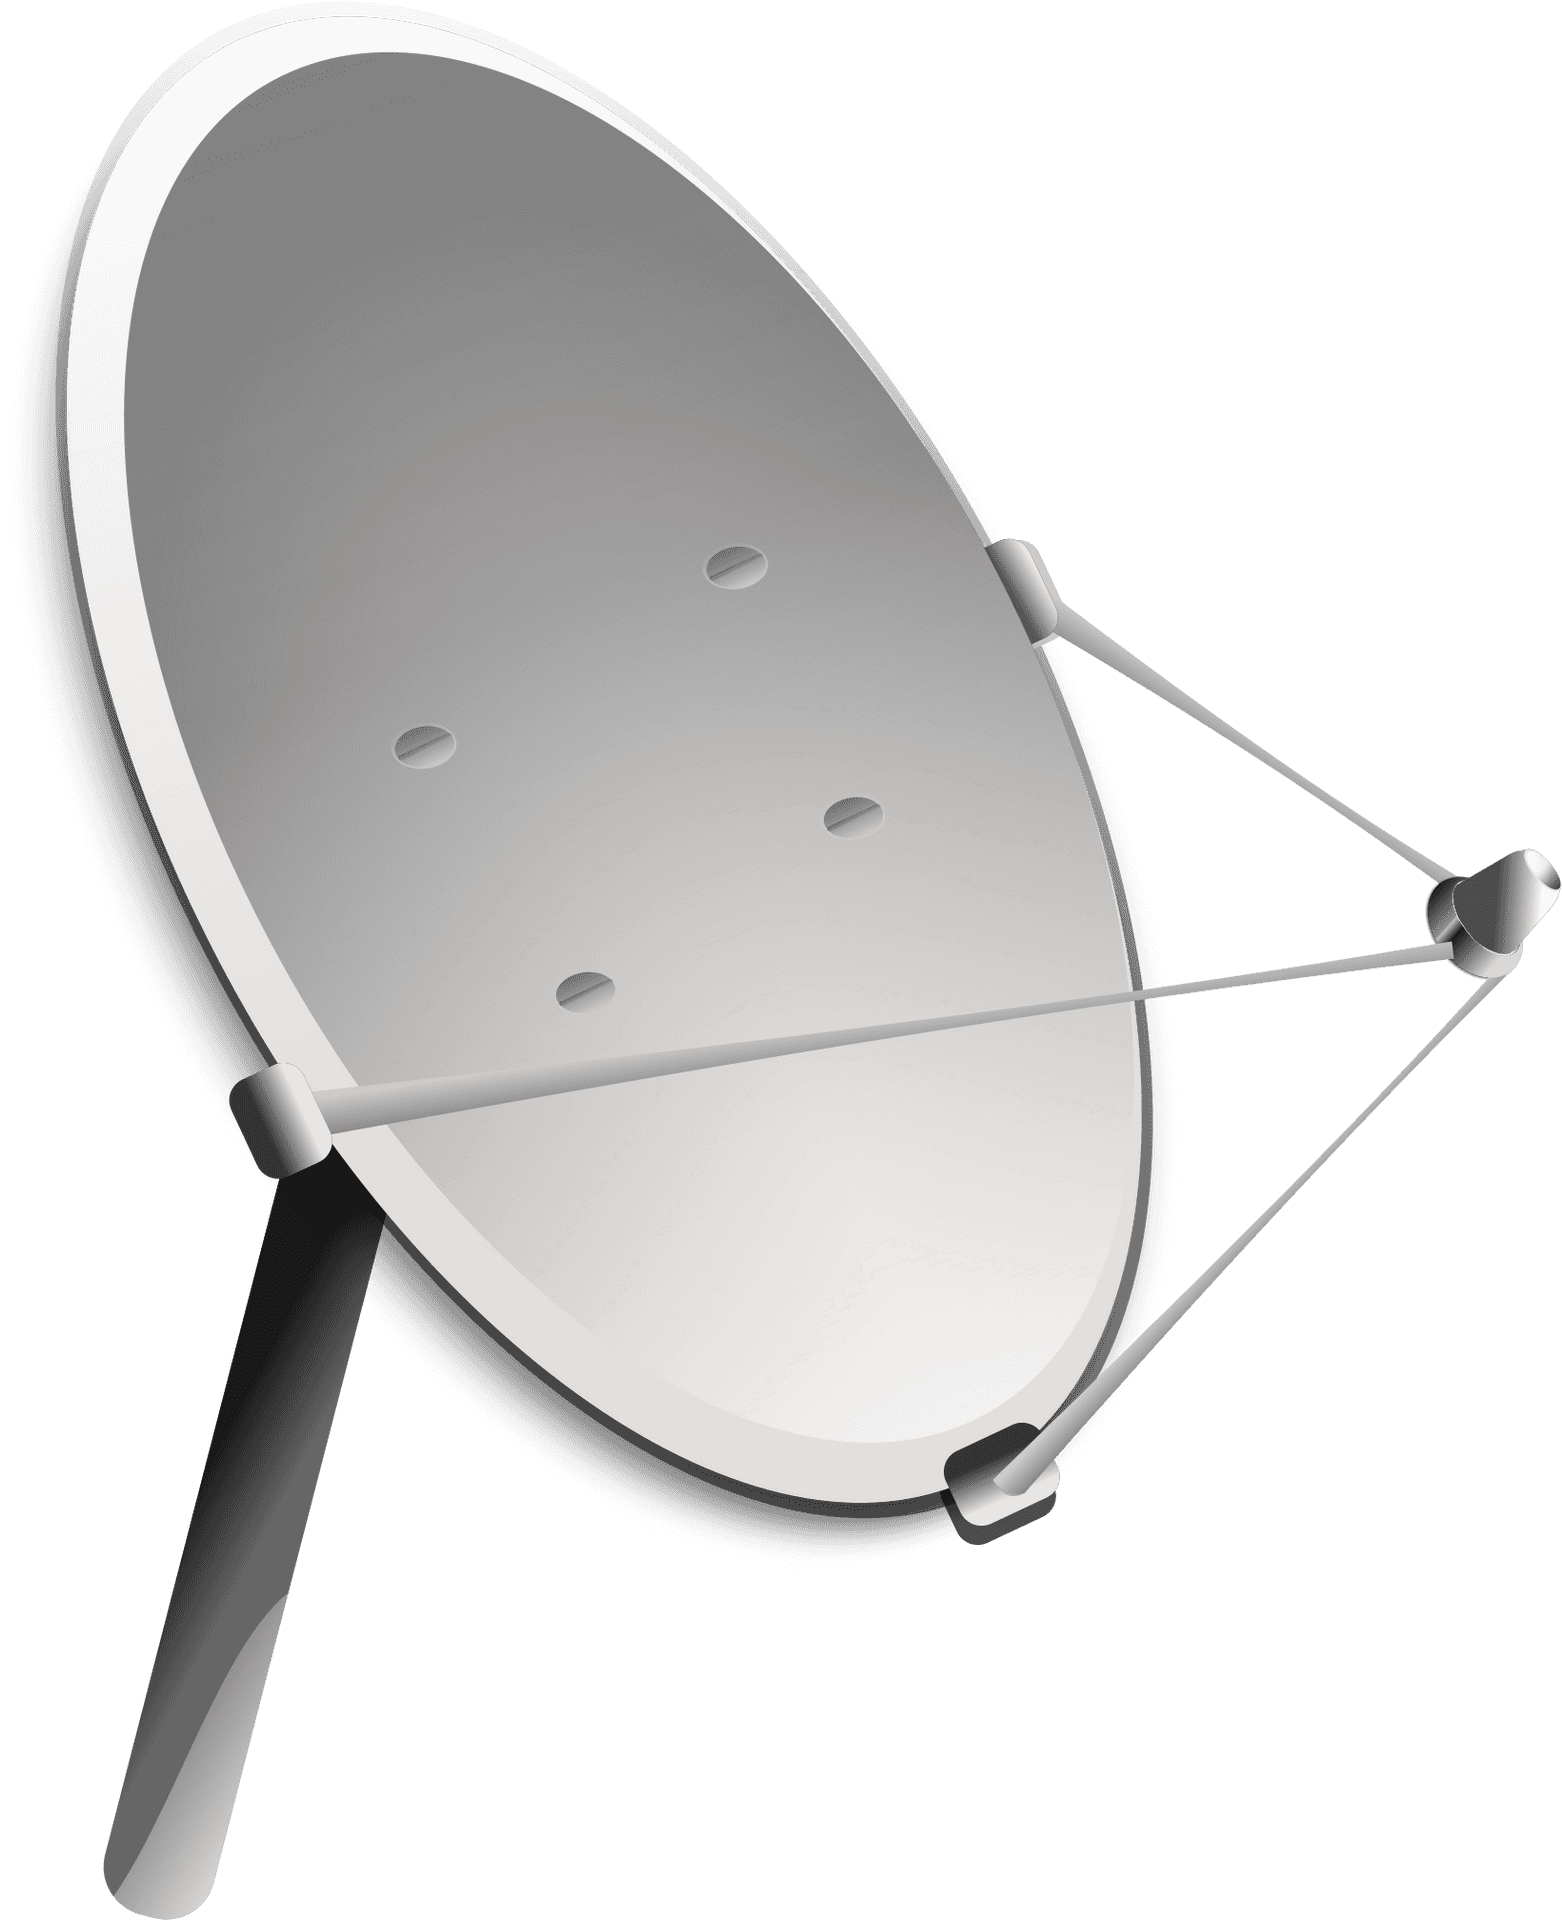 Satellite Dish Graphic PNG